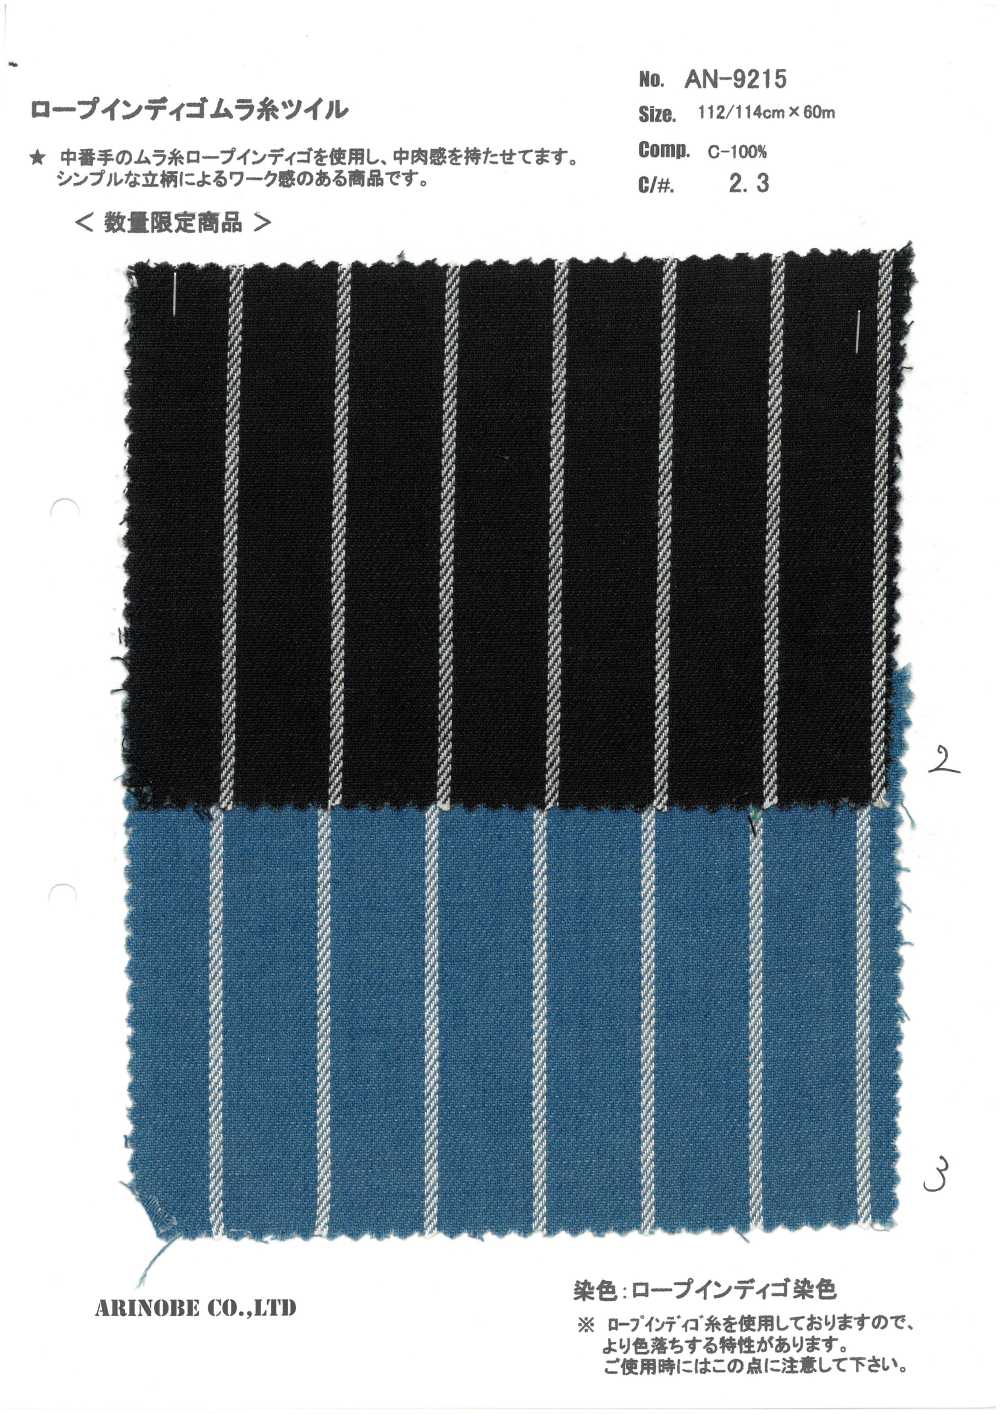 AN-9215 Rope Indigo Uneven Thread Twill[Textile / Fabric] ARINOBE CO., LTD.